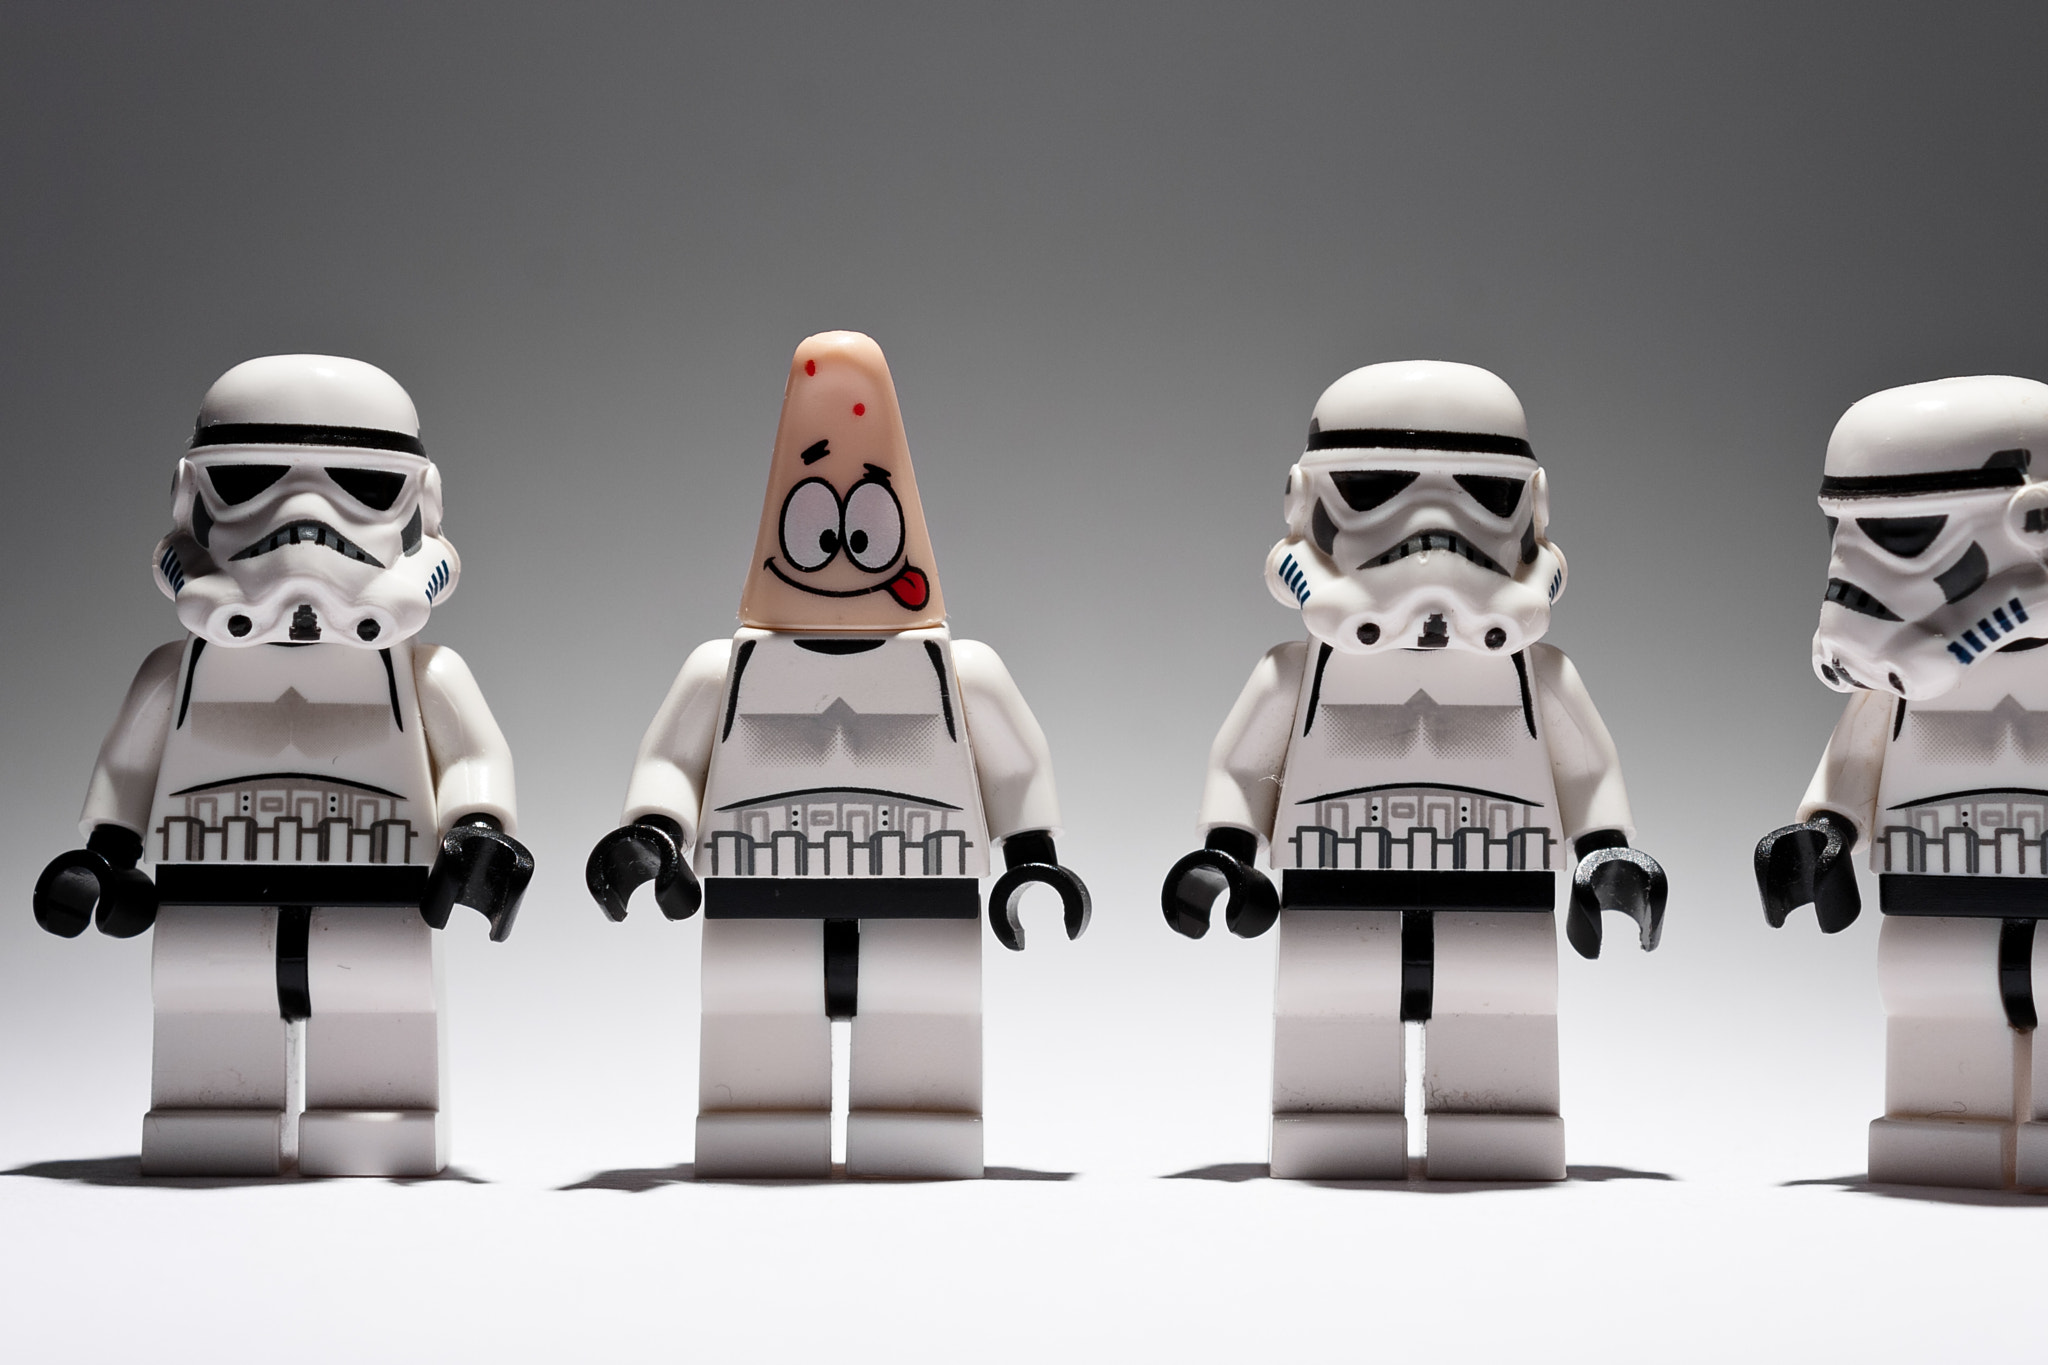 Star Wars LEGO Toys Humor Gray Background Imperial Stormtrooper Patrick Spongebob Squarepants 2048x1365